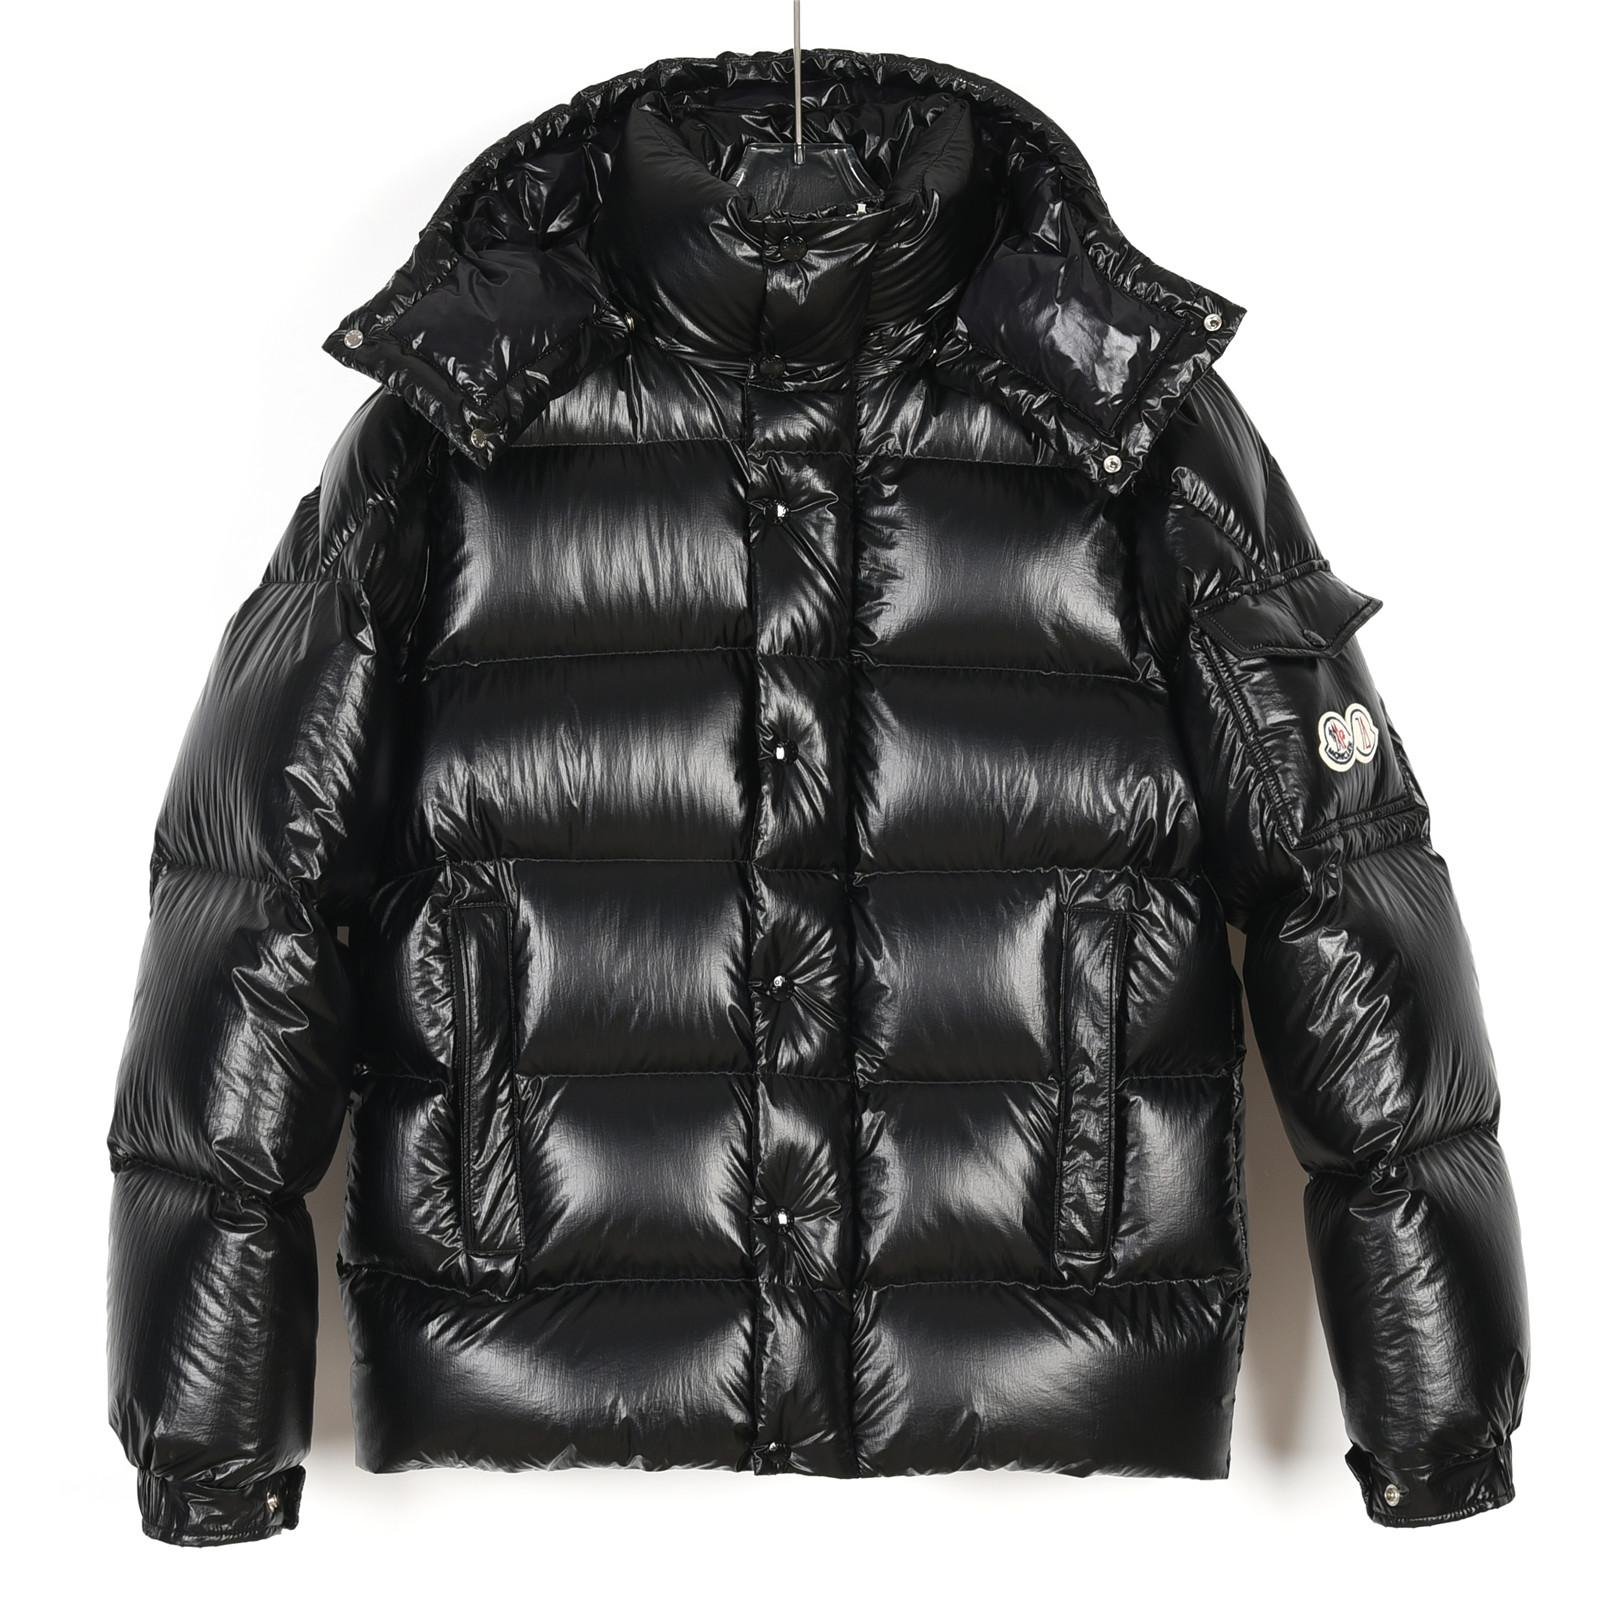         Down Jackets Unisex         Winter Coats         Downjackets Limited